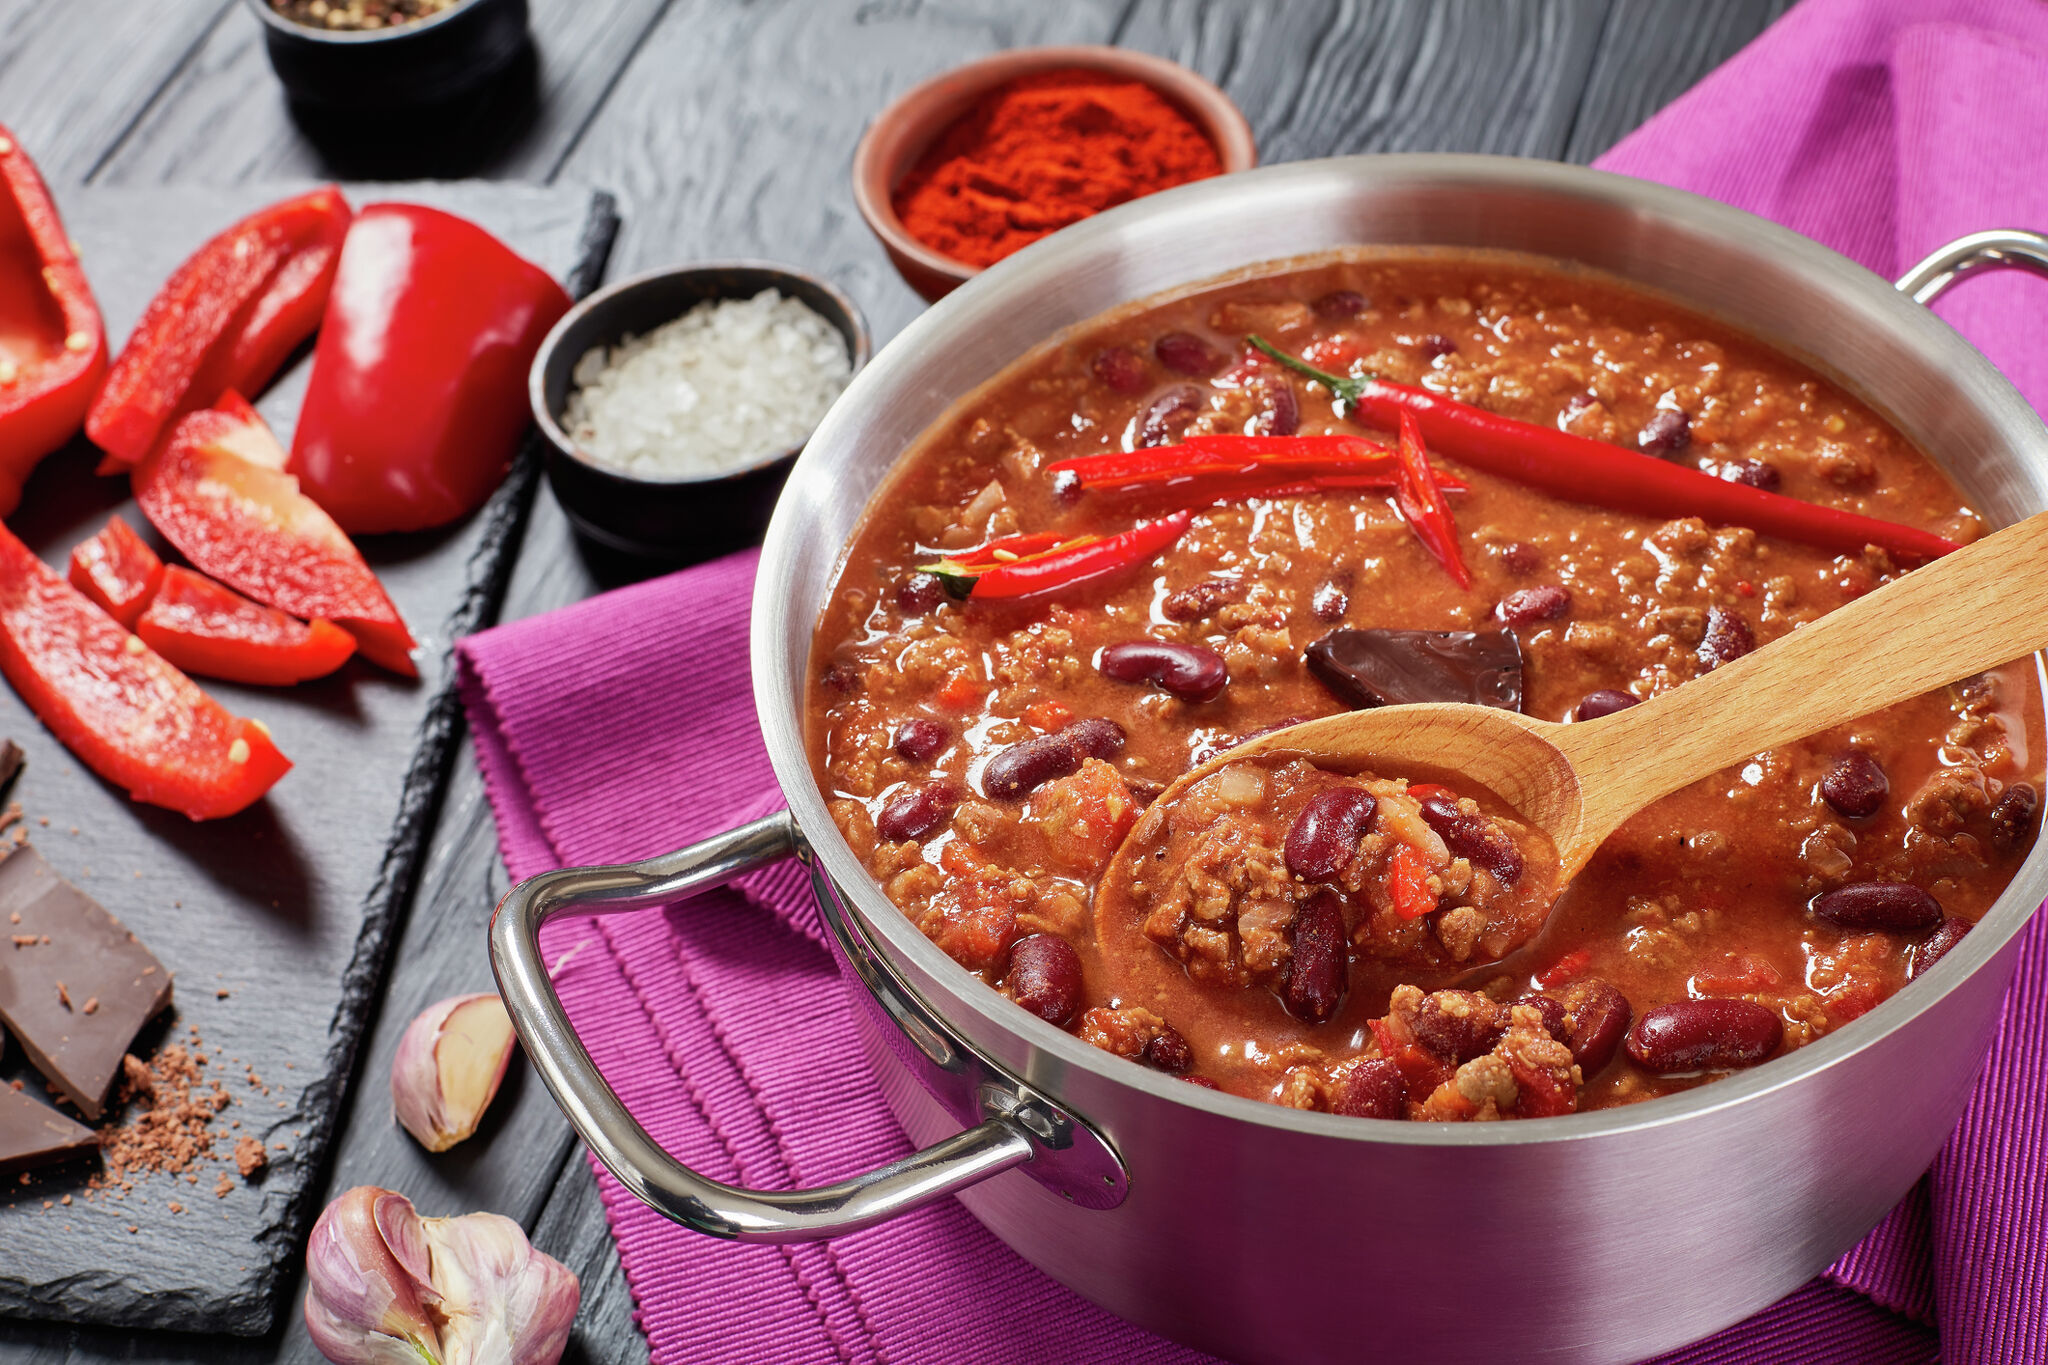 Terlingua chili cookoff featured on 'Texas Bucket List'